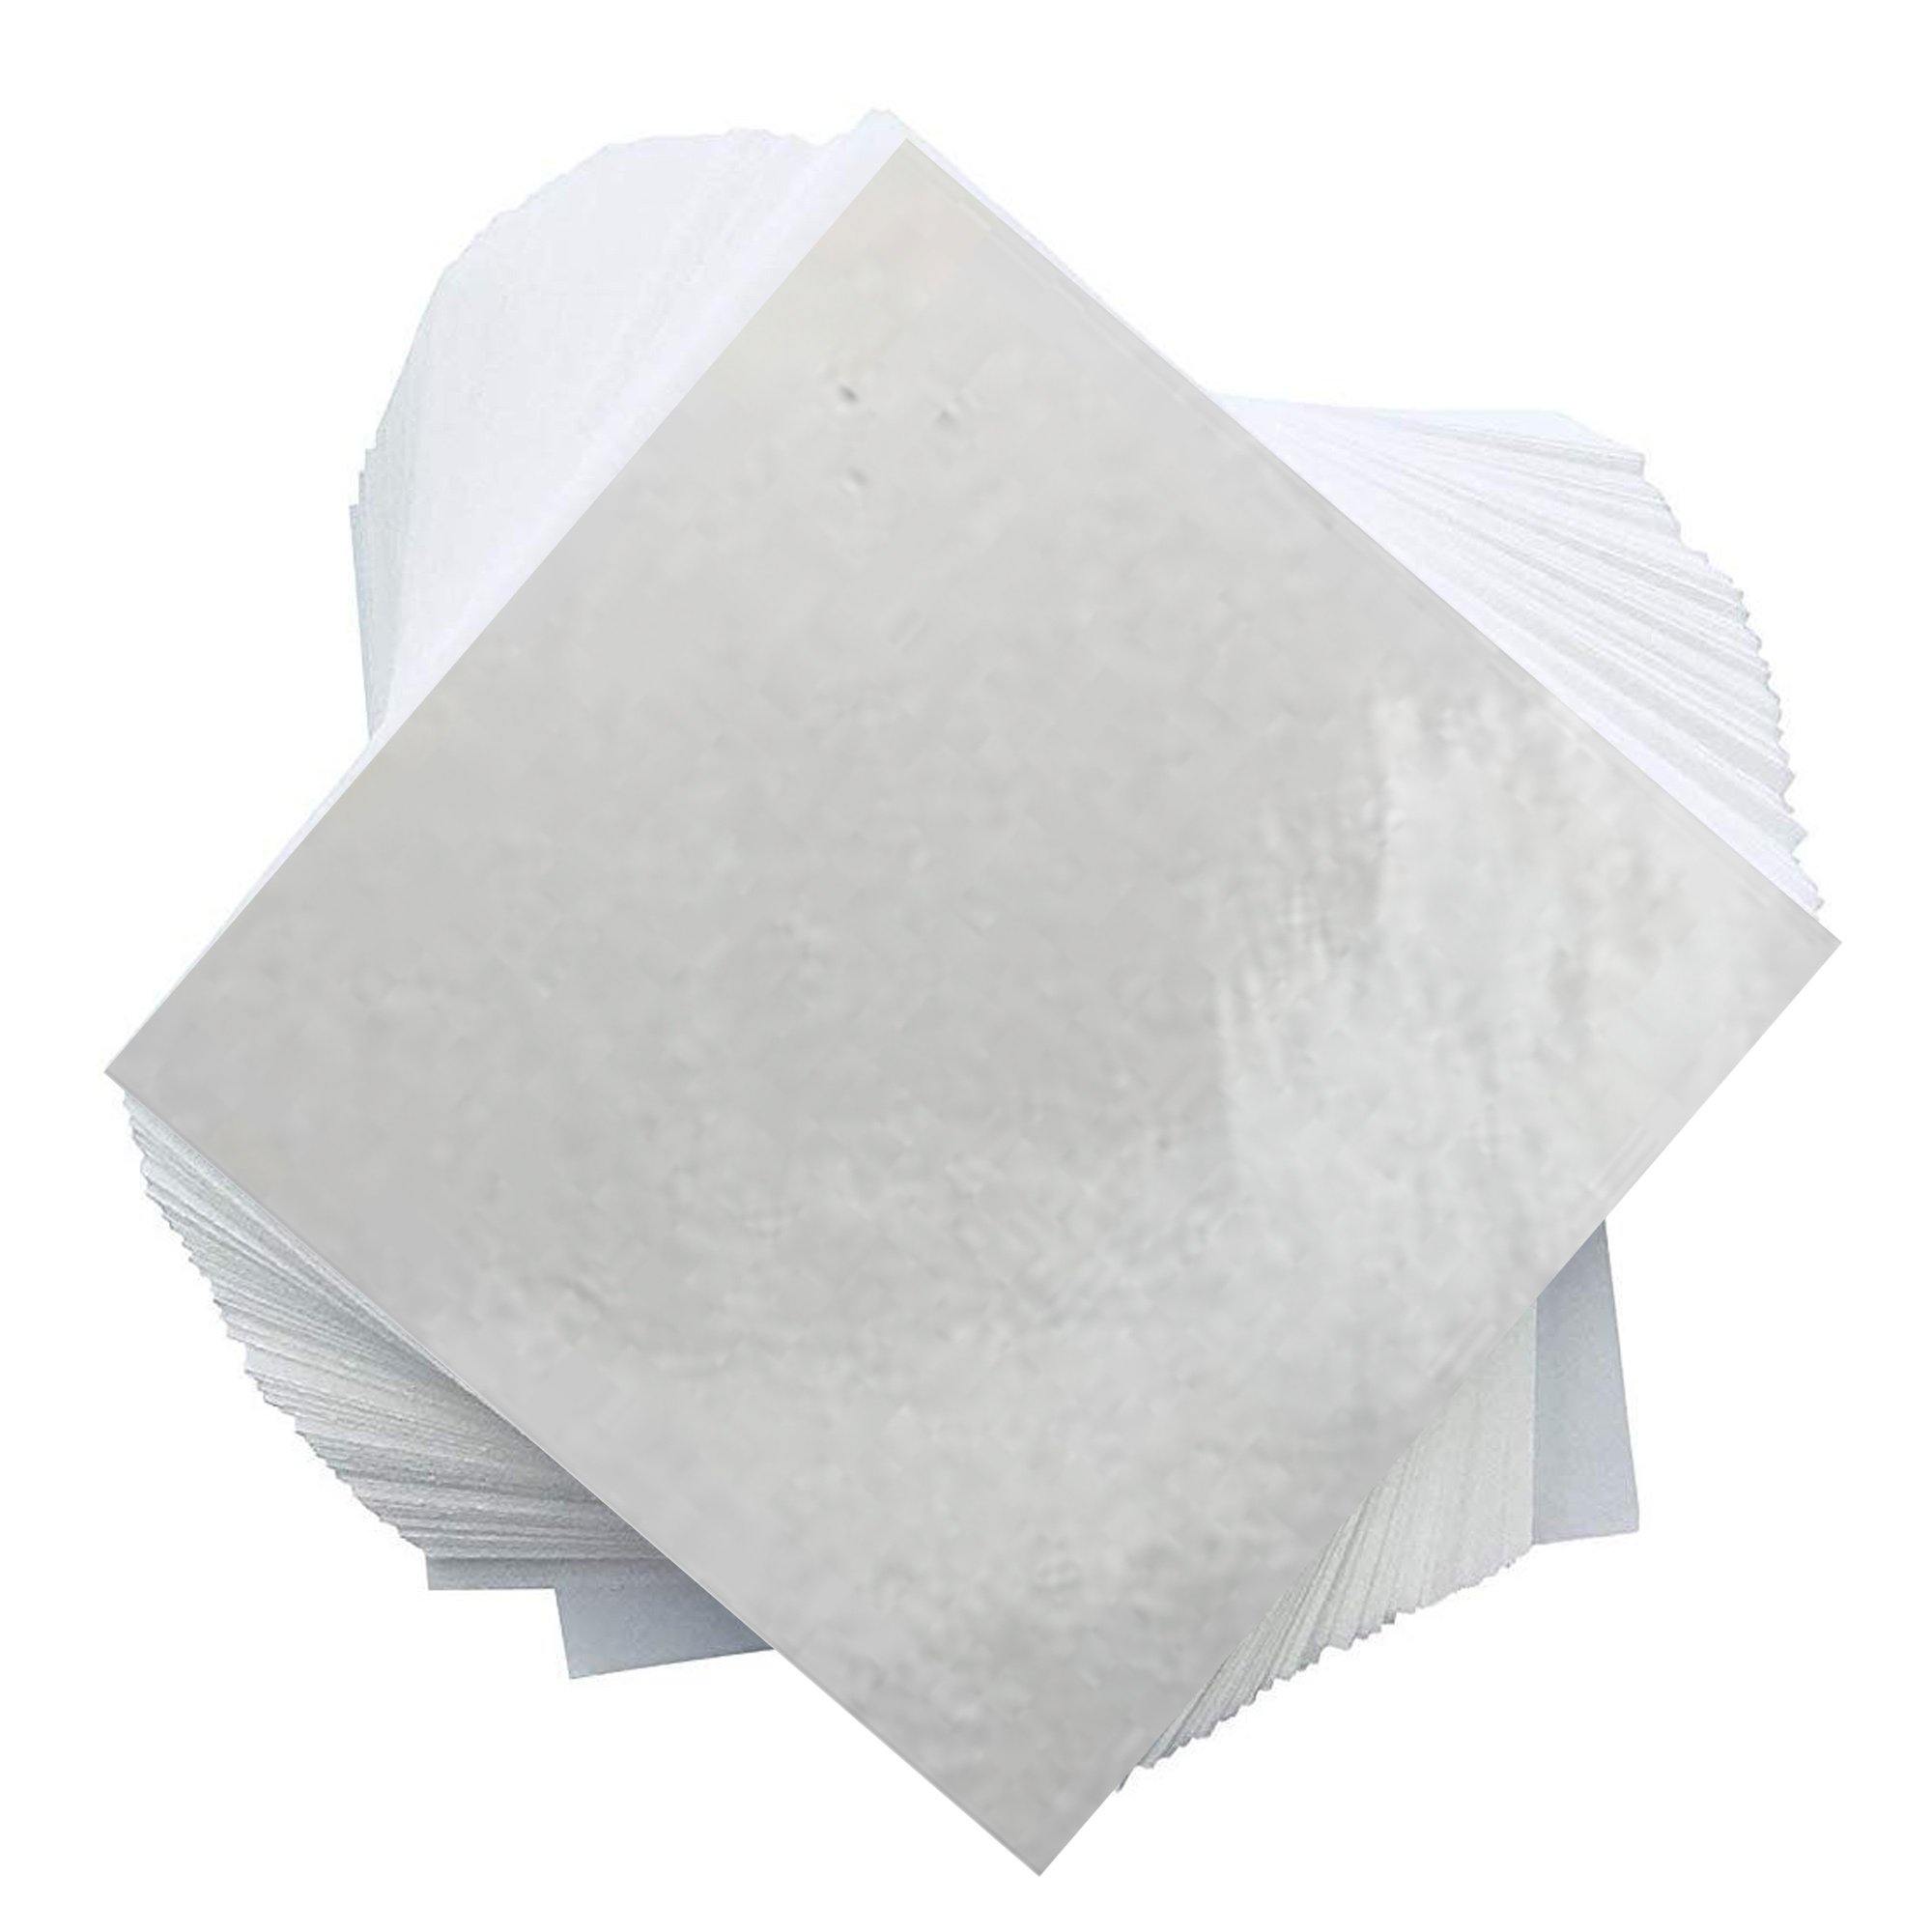  Rosineer 10x7 Parchment Paper, Non Stick, Pre-Cut